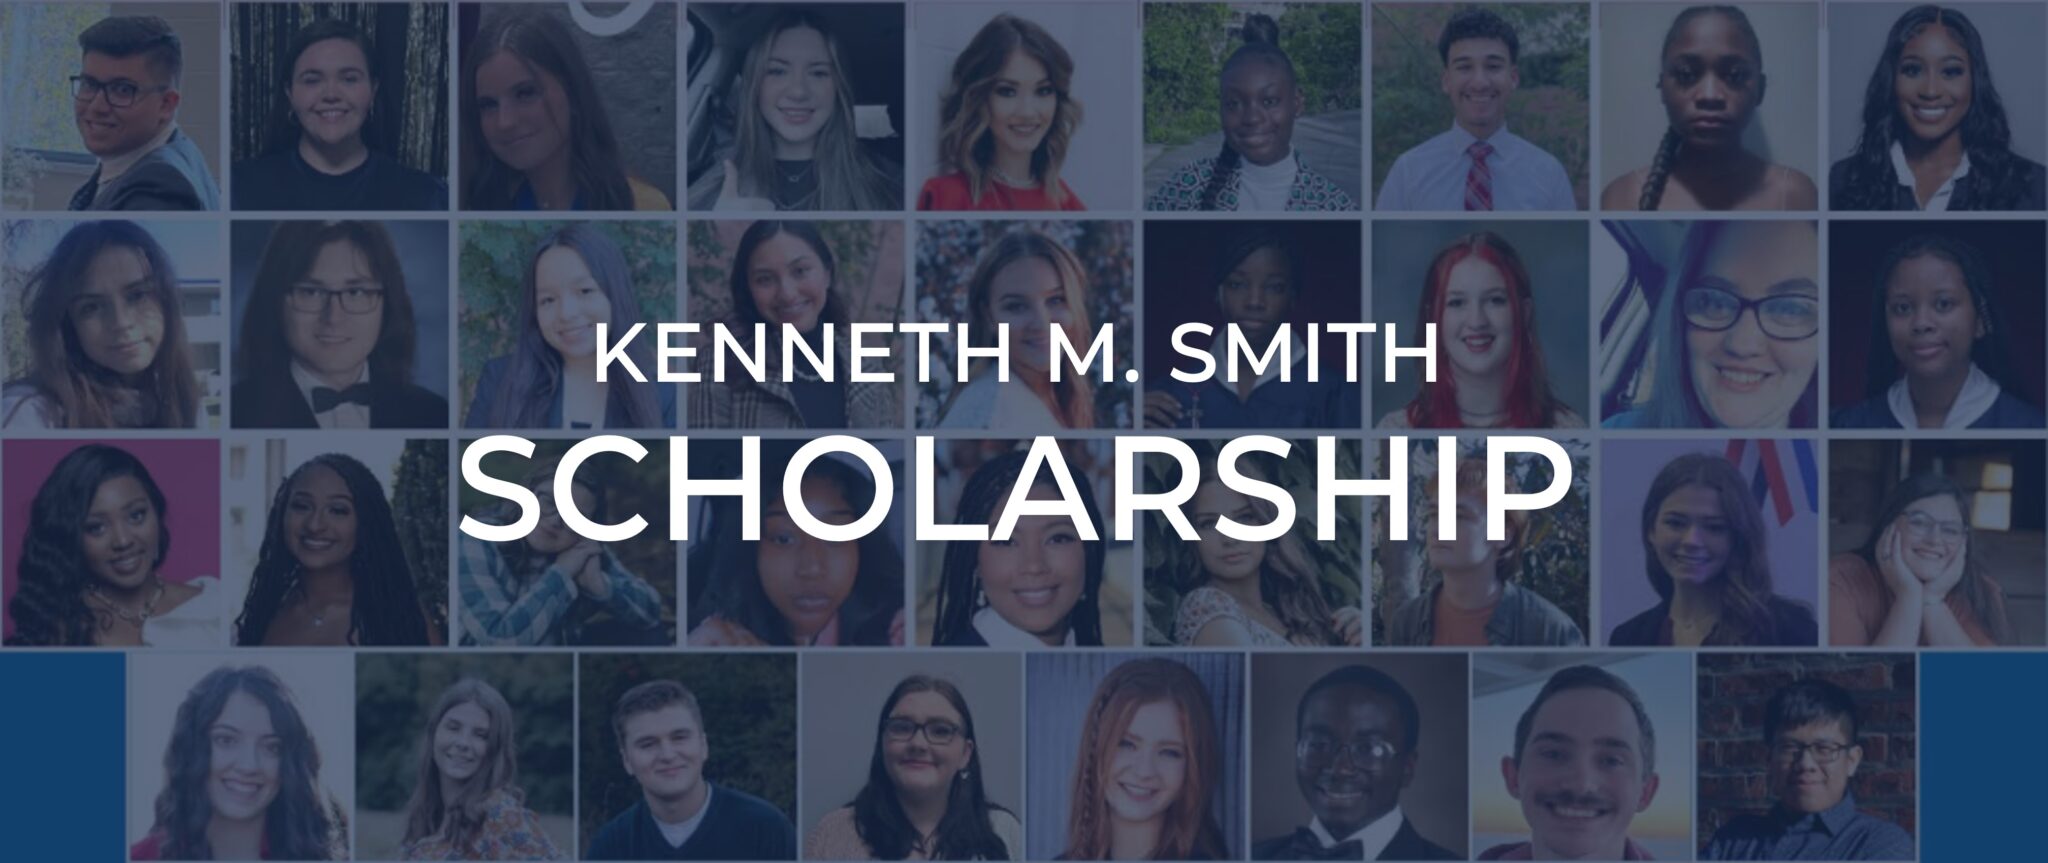 Kenneth M. Smith Scholarship